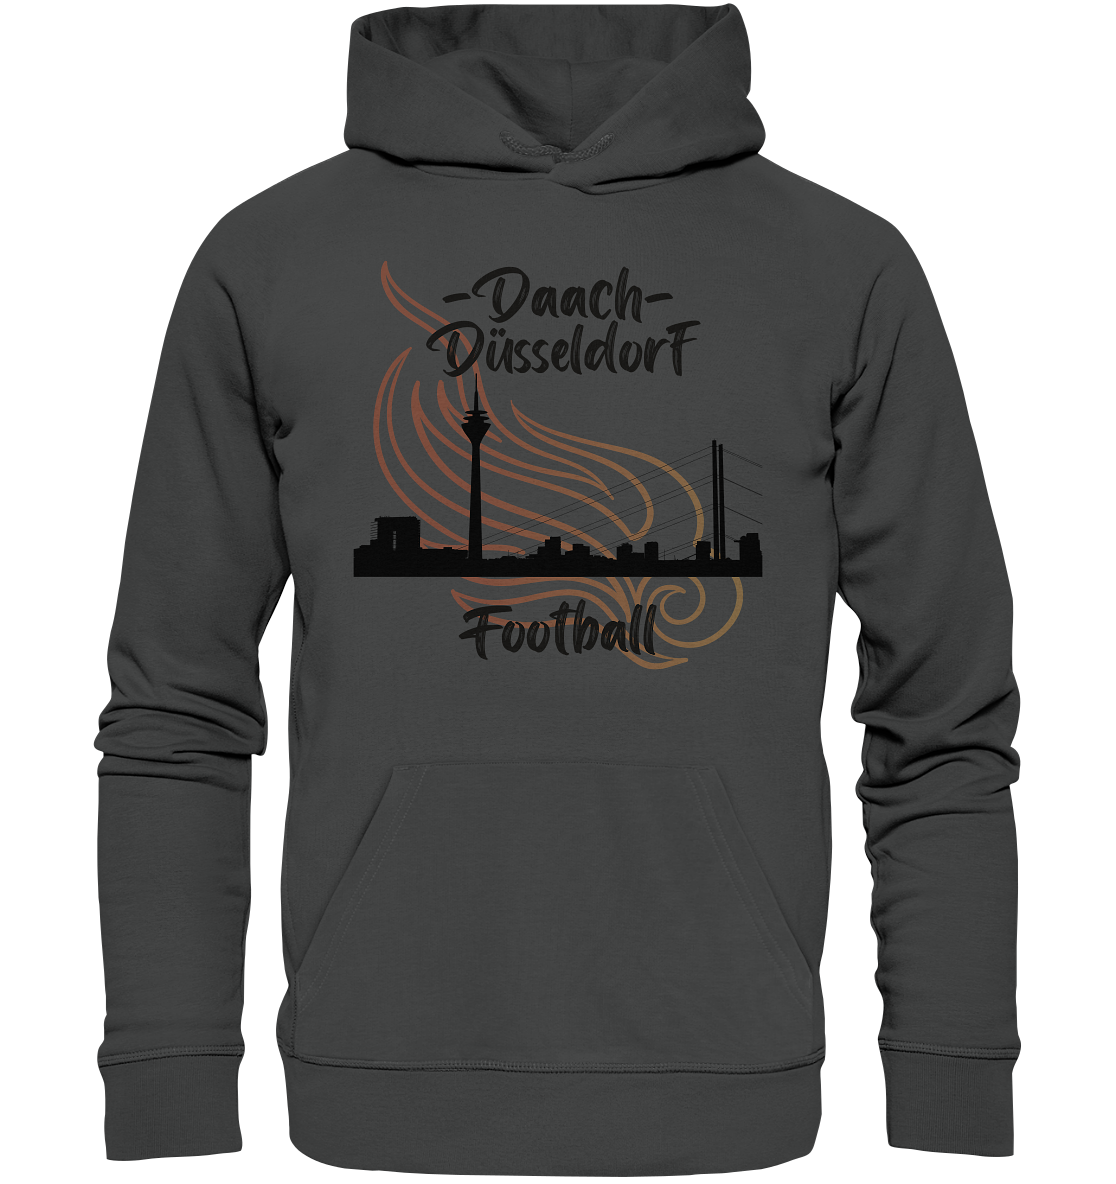 Daach - Düsseldorf Football - Organic Basic Hoodie - Football Unity Football Unity